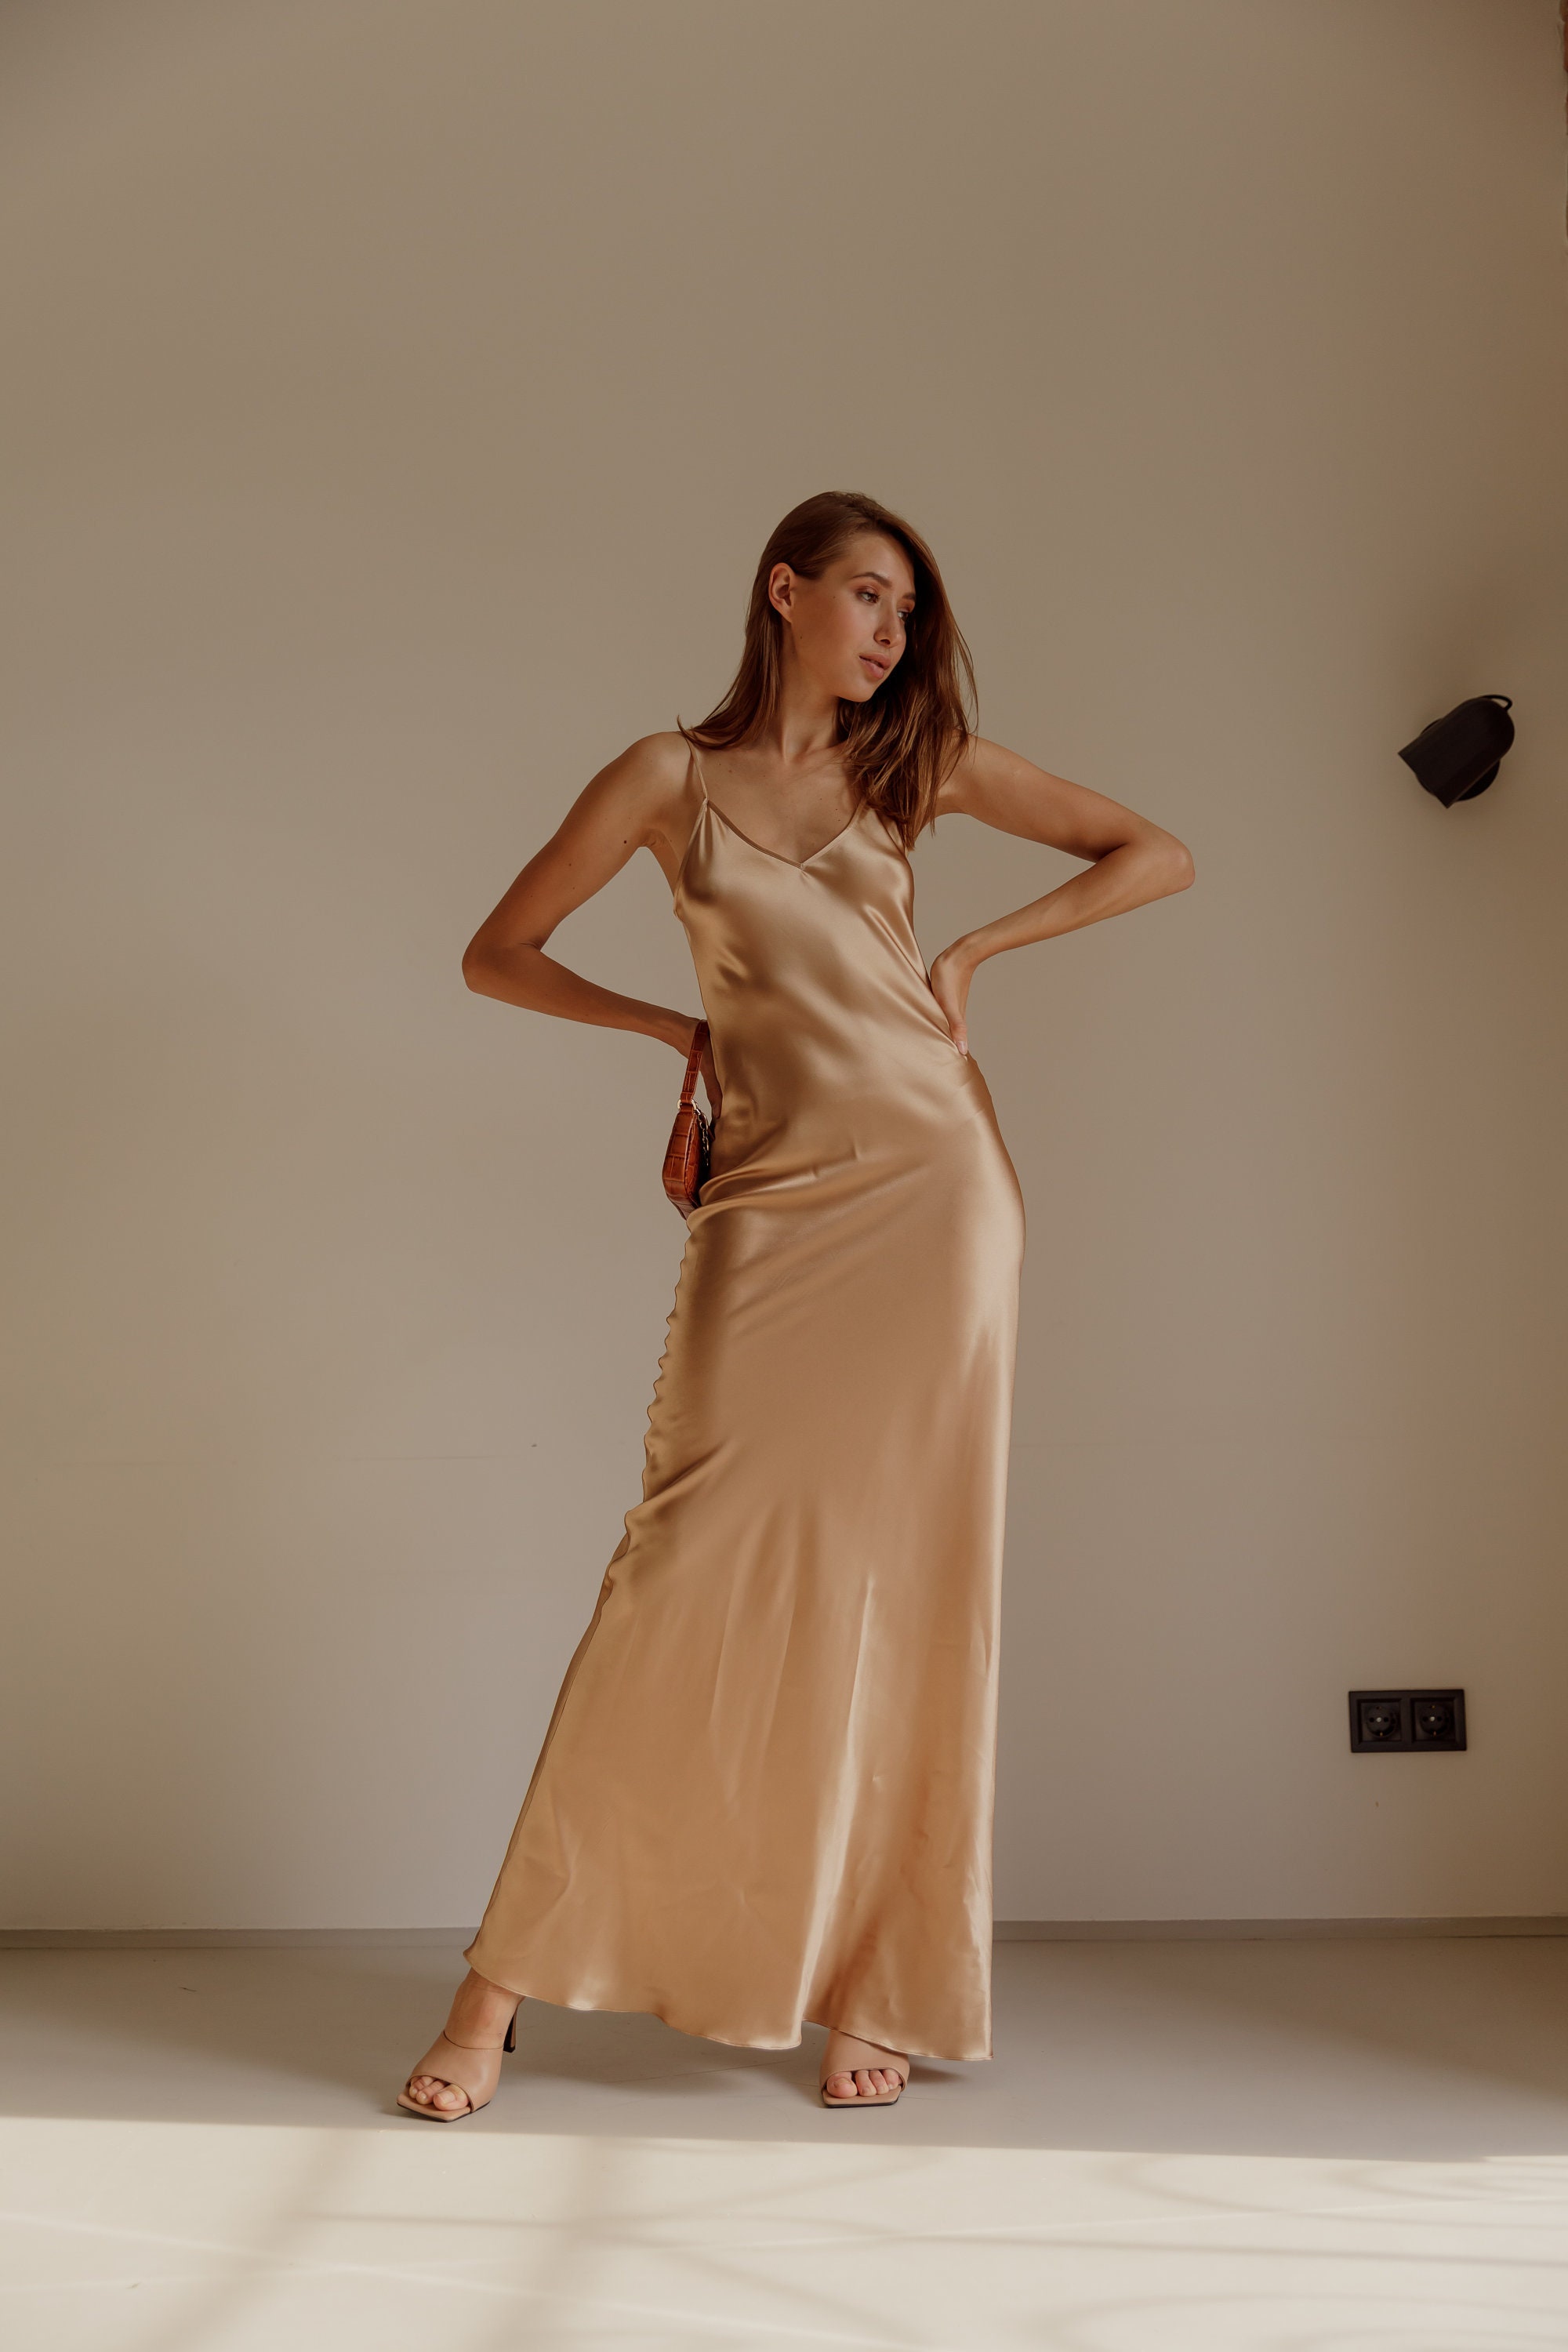 Nora Lace Long Slip Dress for €34.99 - Slip dresses & Babydolls -  Hunkemöller